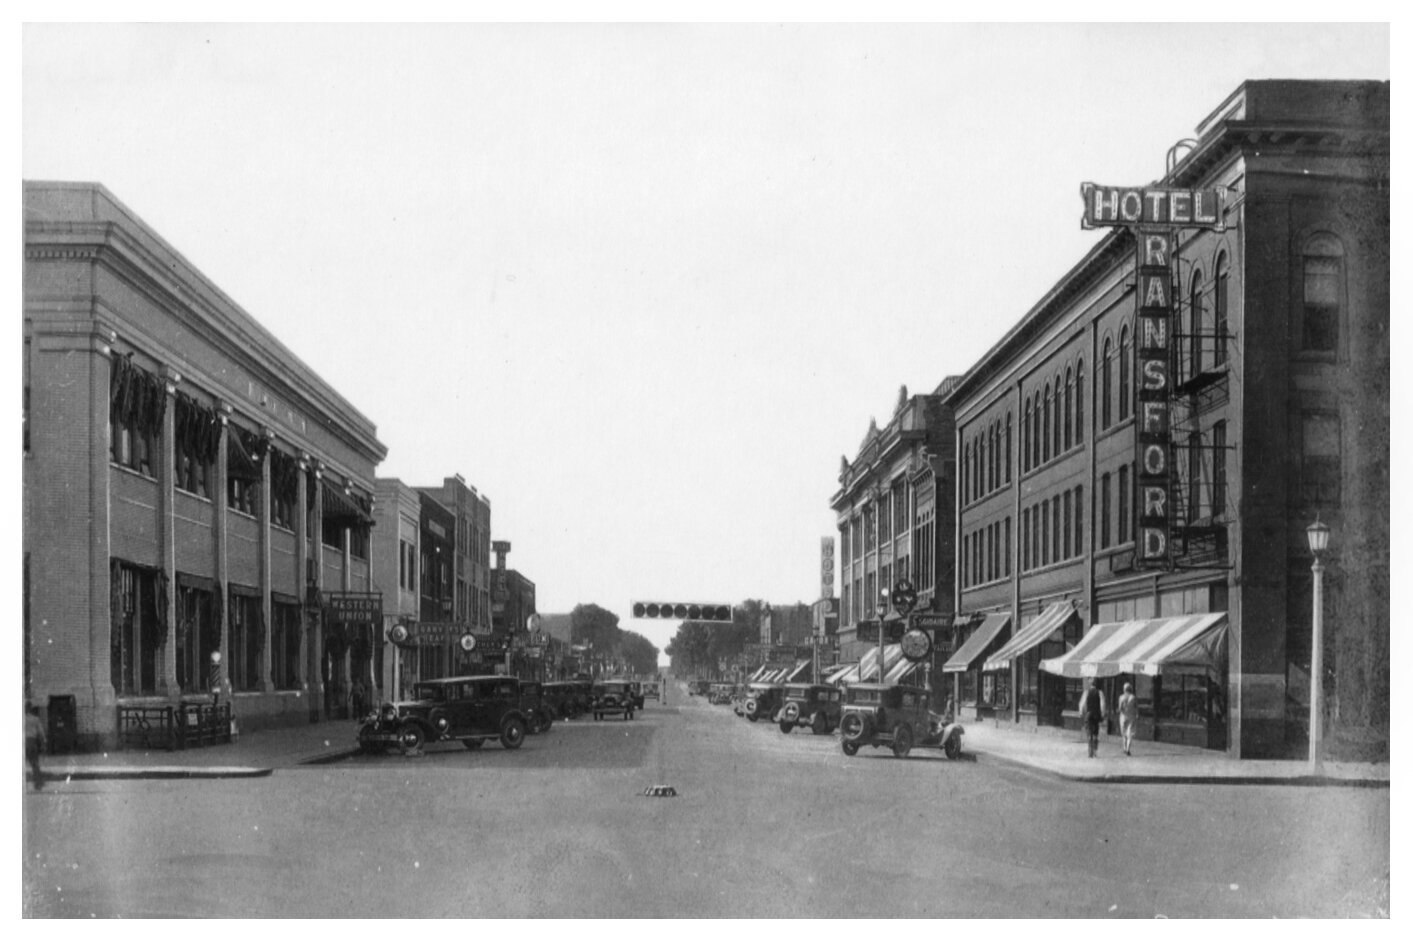  Downtown Brainerd, 1930s 